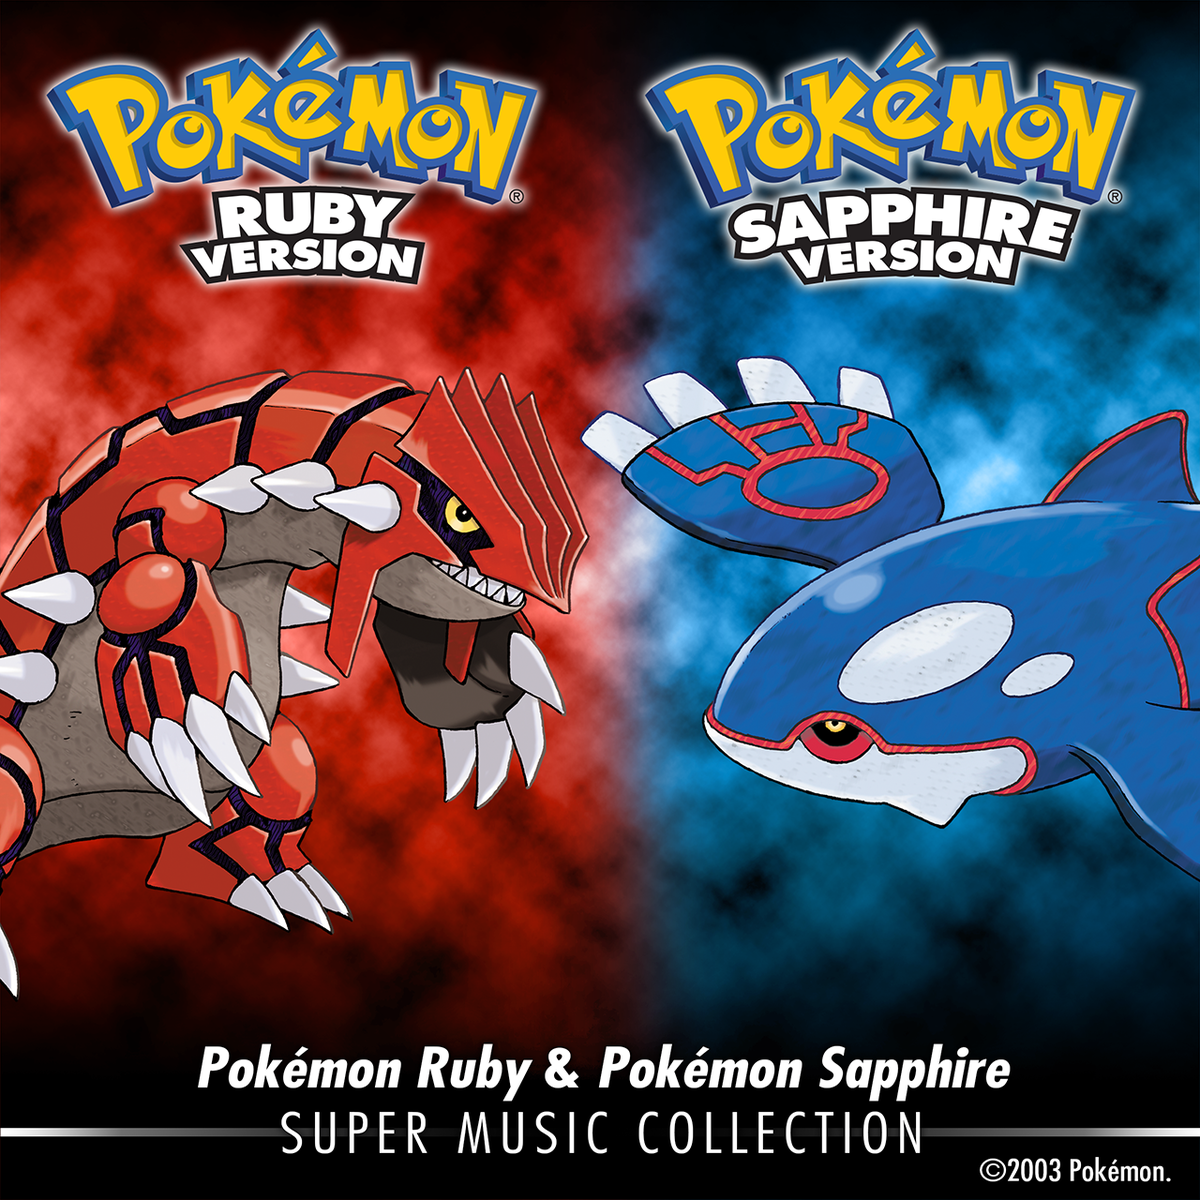 Pokémon Ruby & Pokémon Sapphire: Super Music Collection